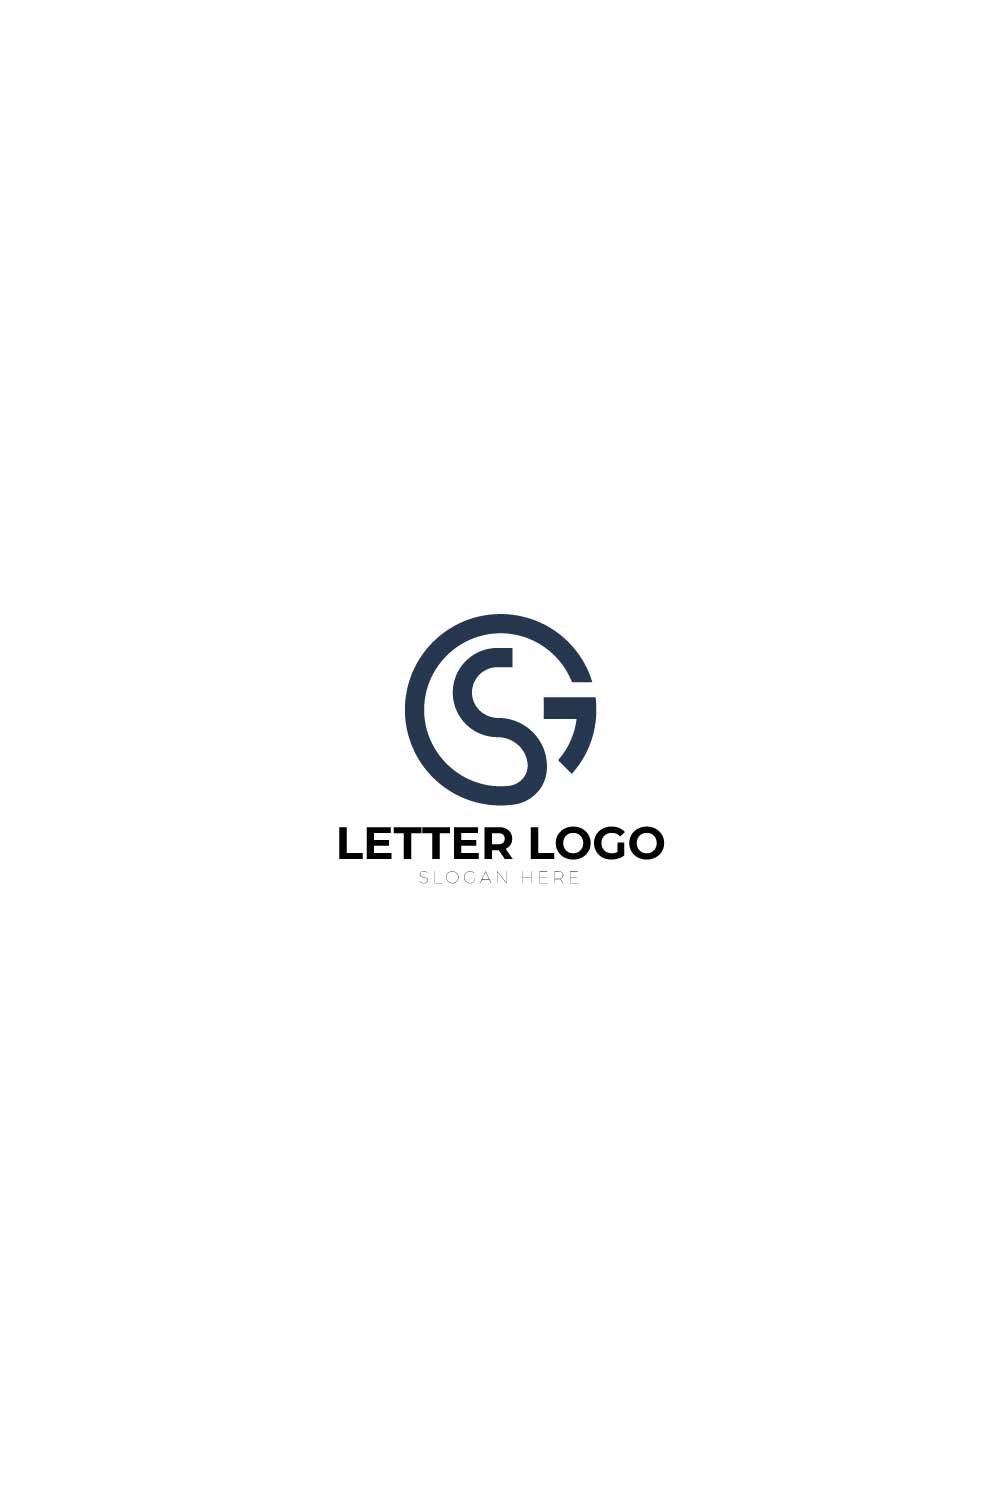 Abstract letter JK logo design pinterest preview image.